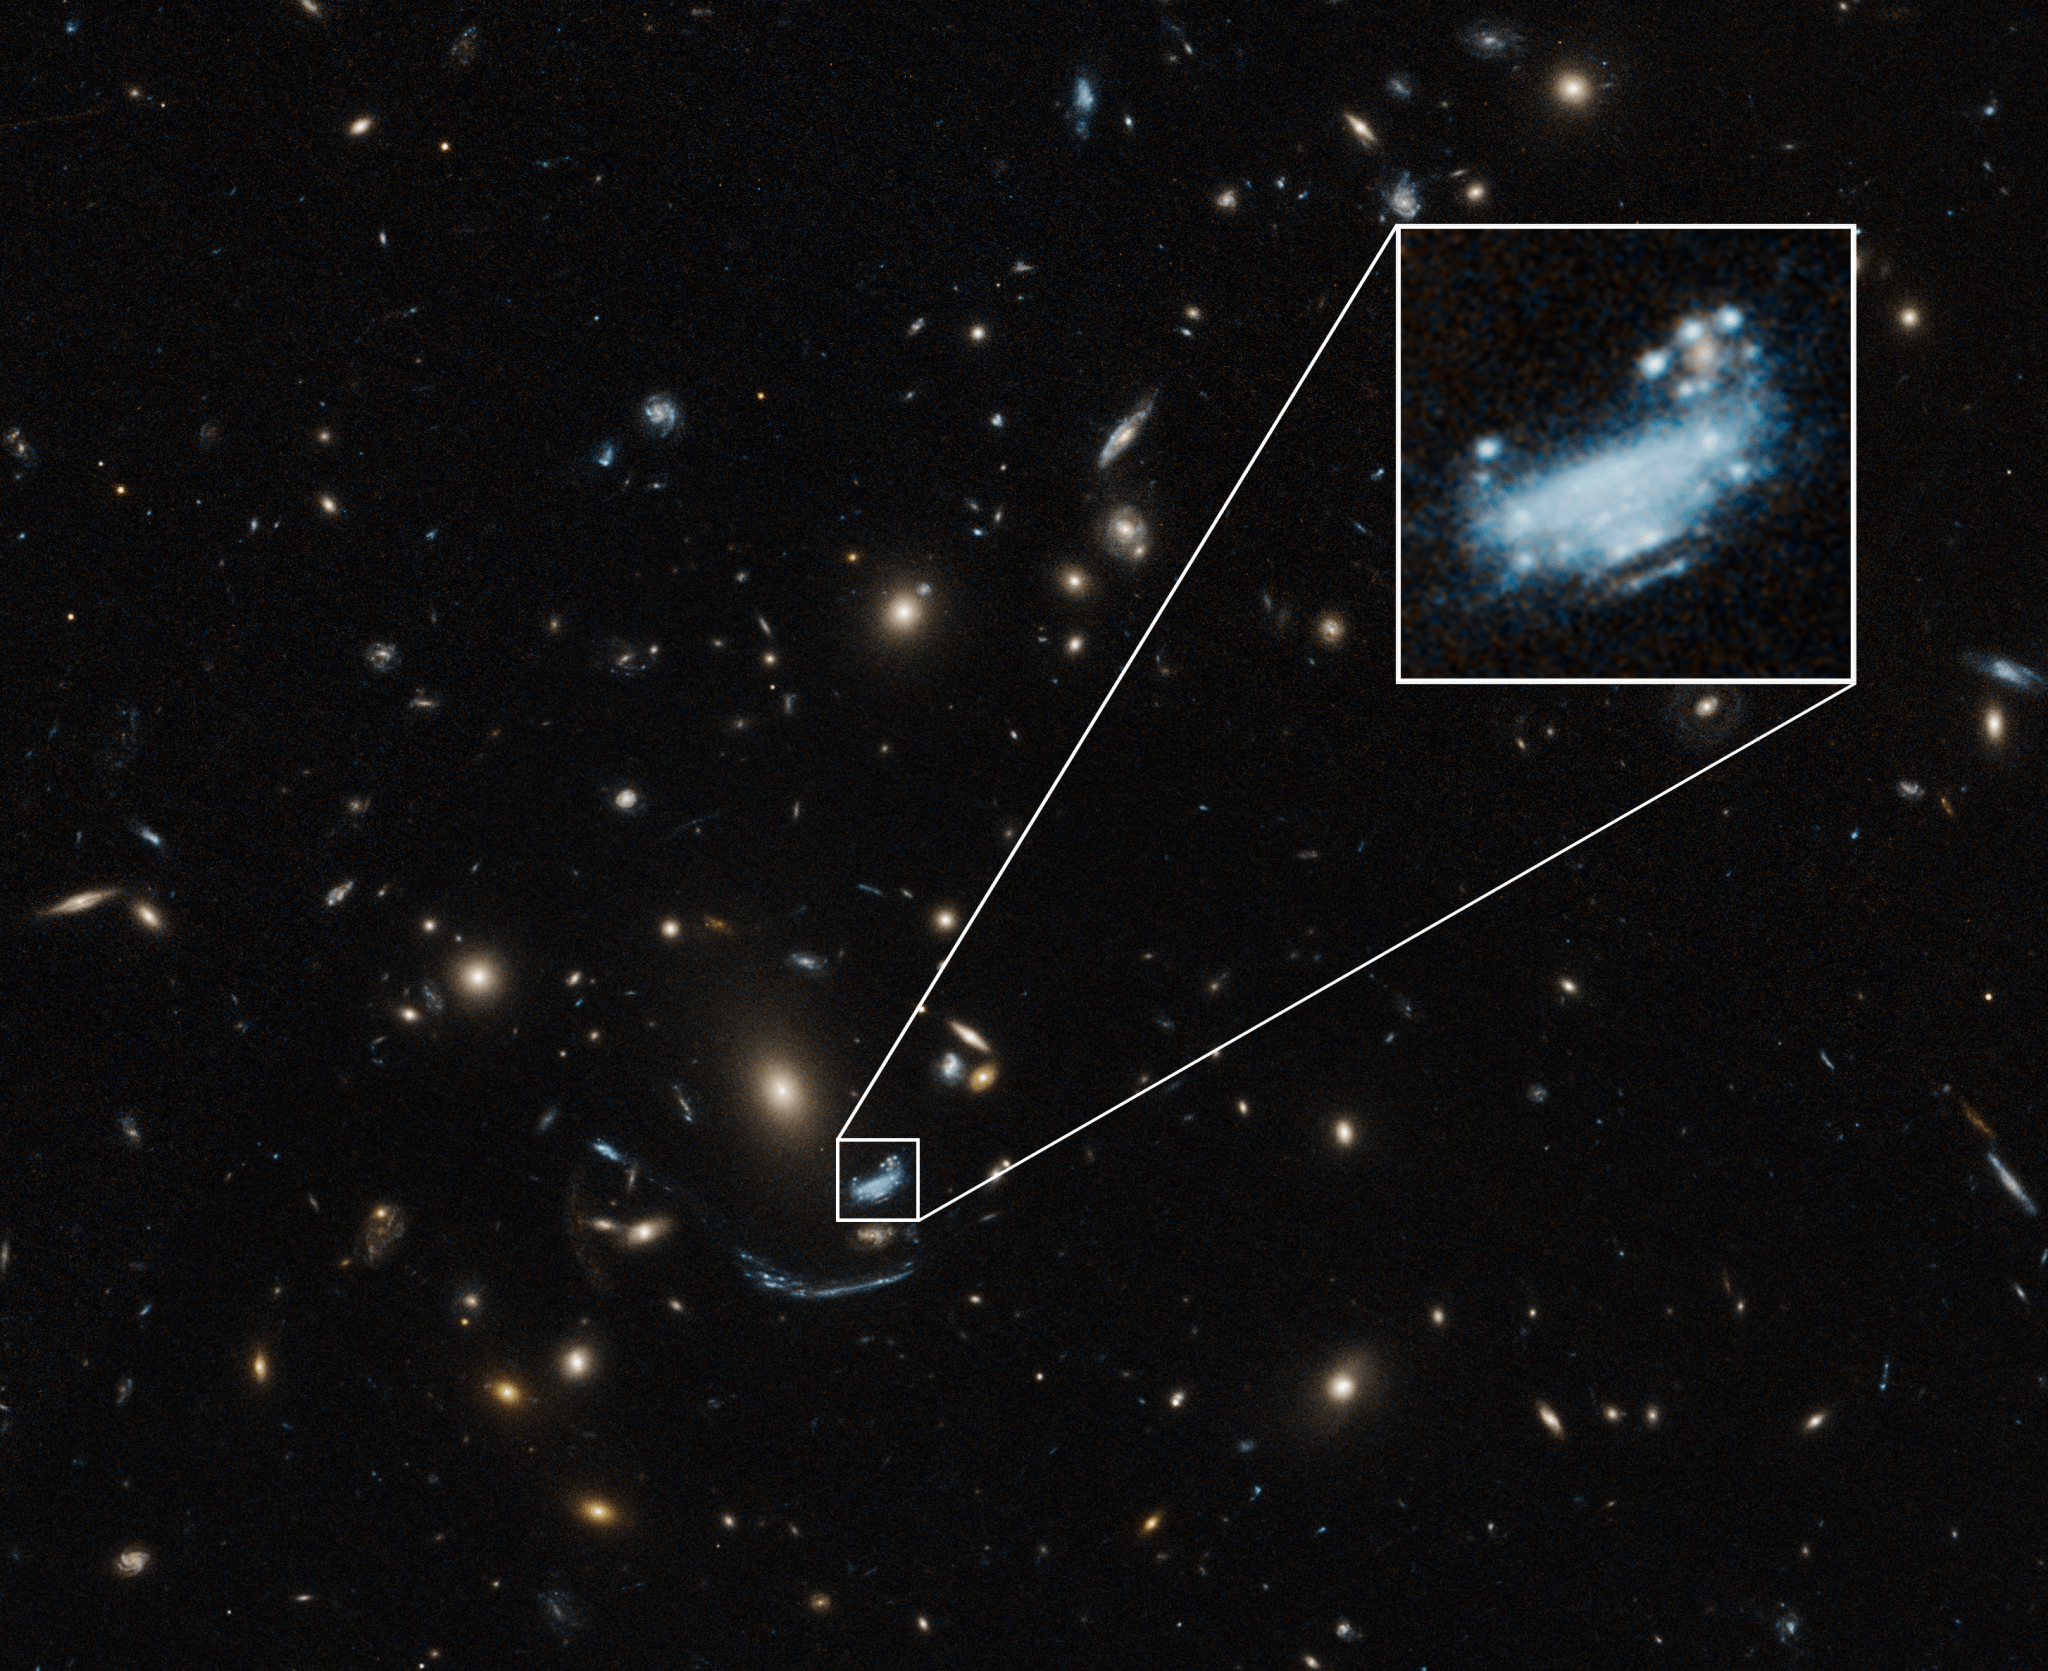 Hubble Space Telescope image of galaxy SDSS J1226+2152